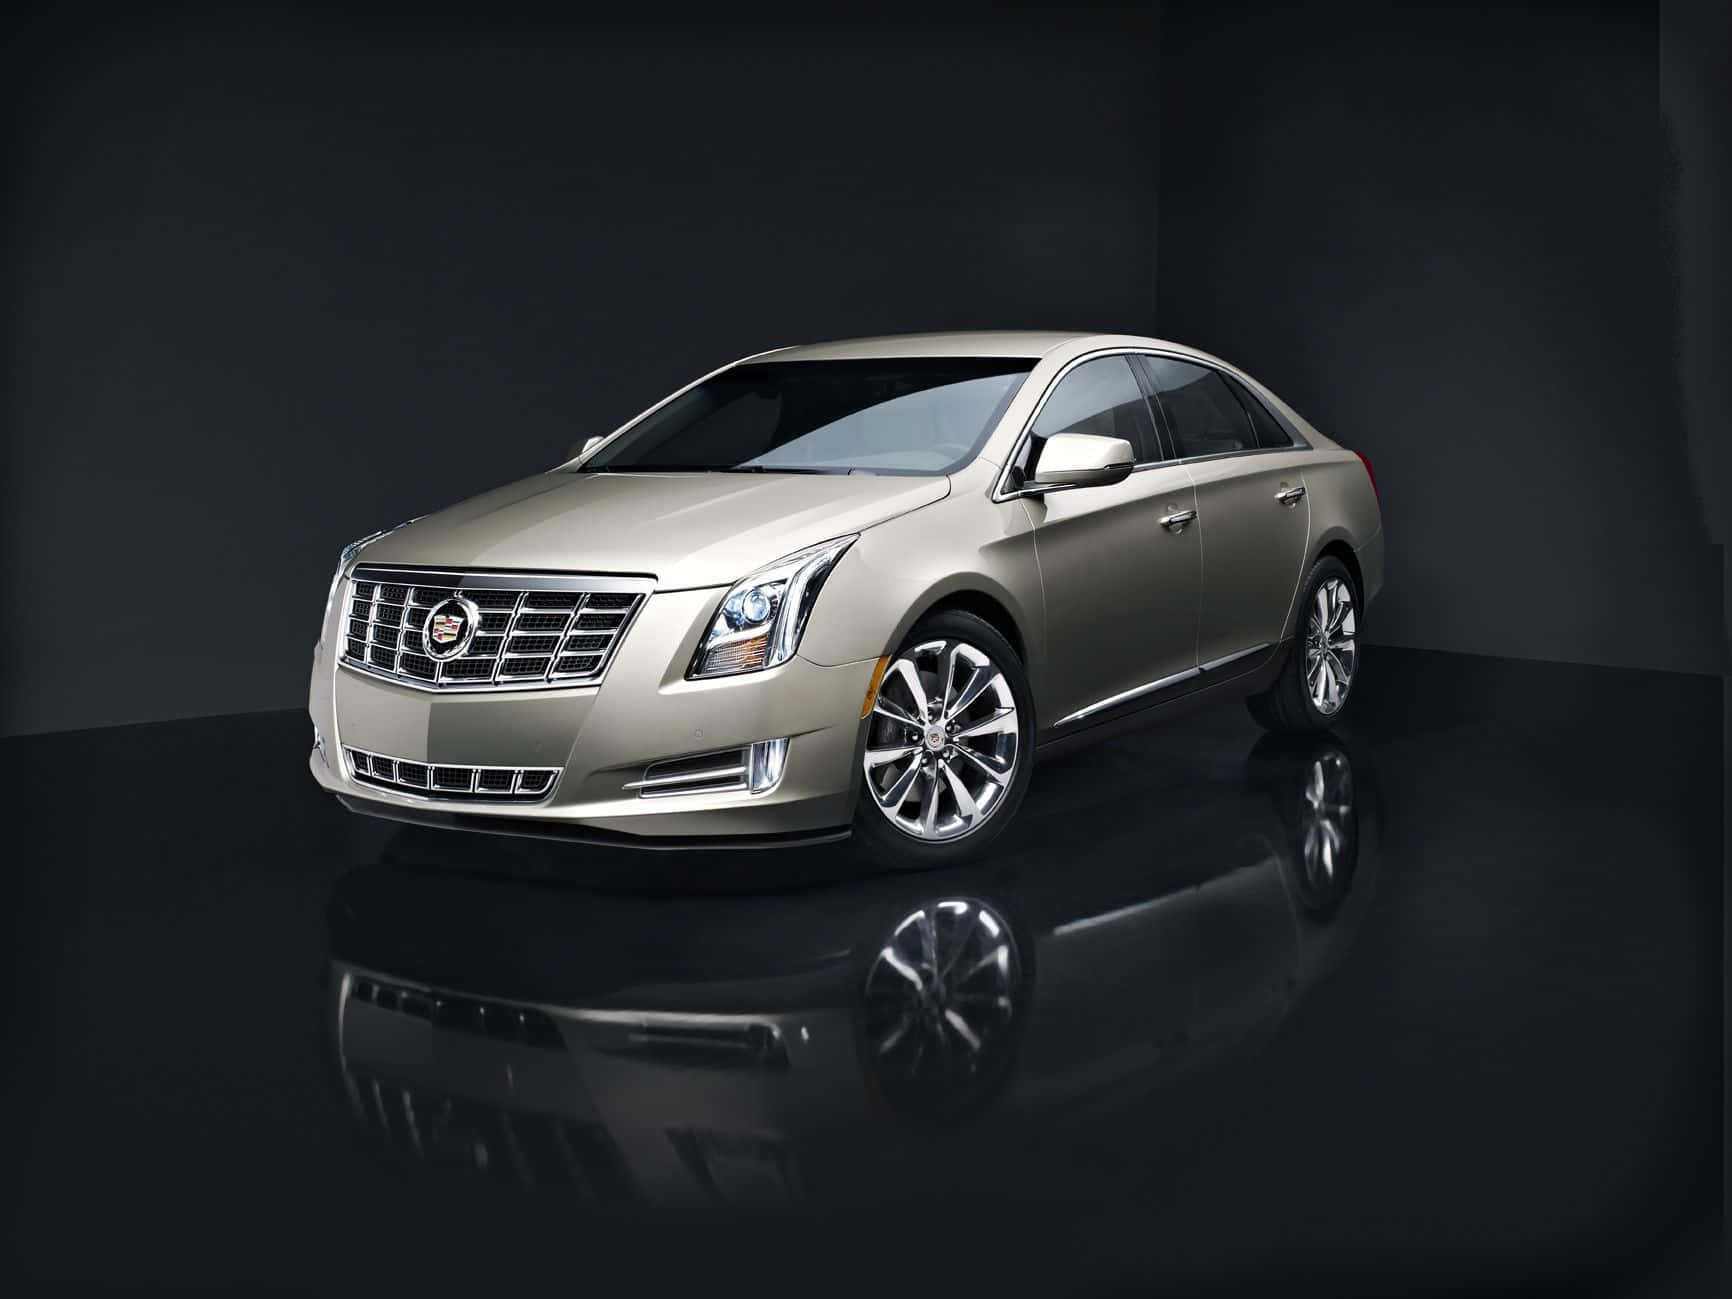 Stunning Cadillac XTS in Motion Wallpaper